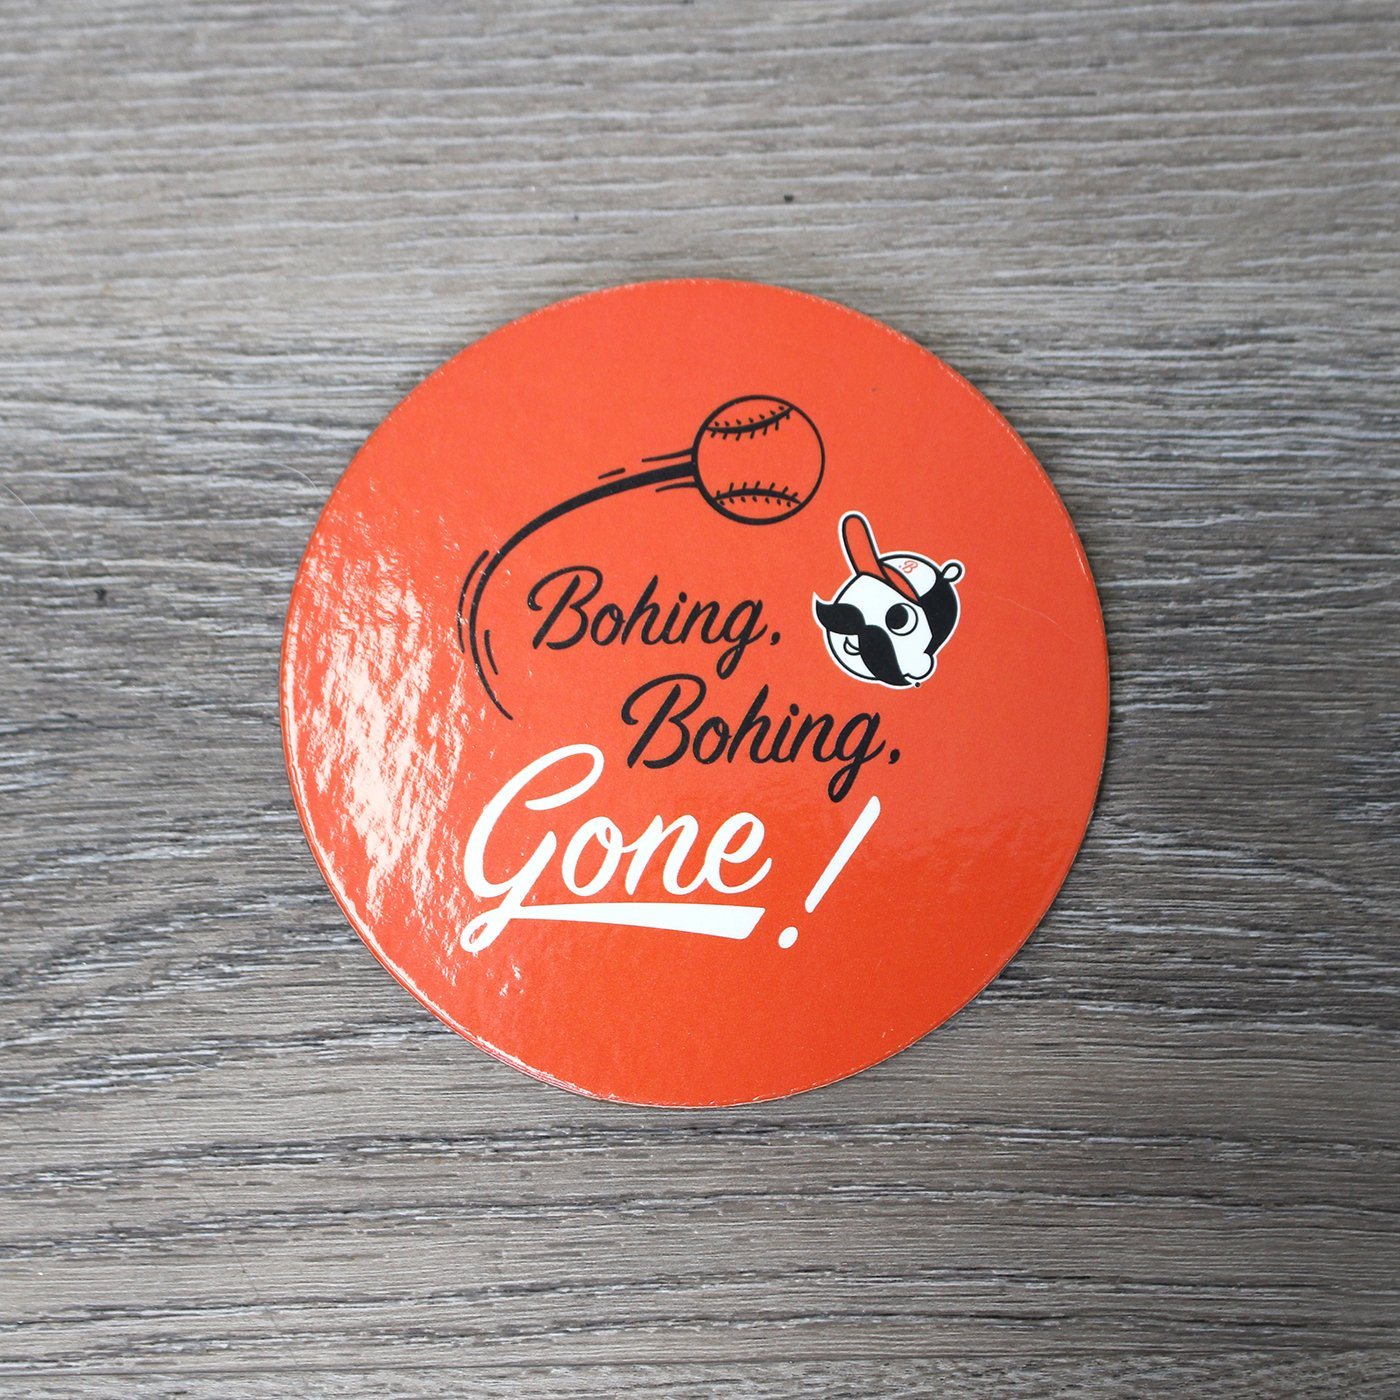 Bohing, Bohing, Gone! National Bohemian Baseball (Orange) / Cork Coaster - Route One Apparel